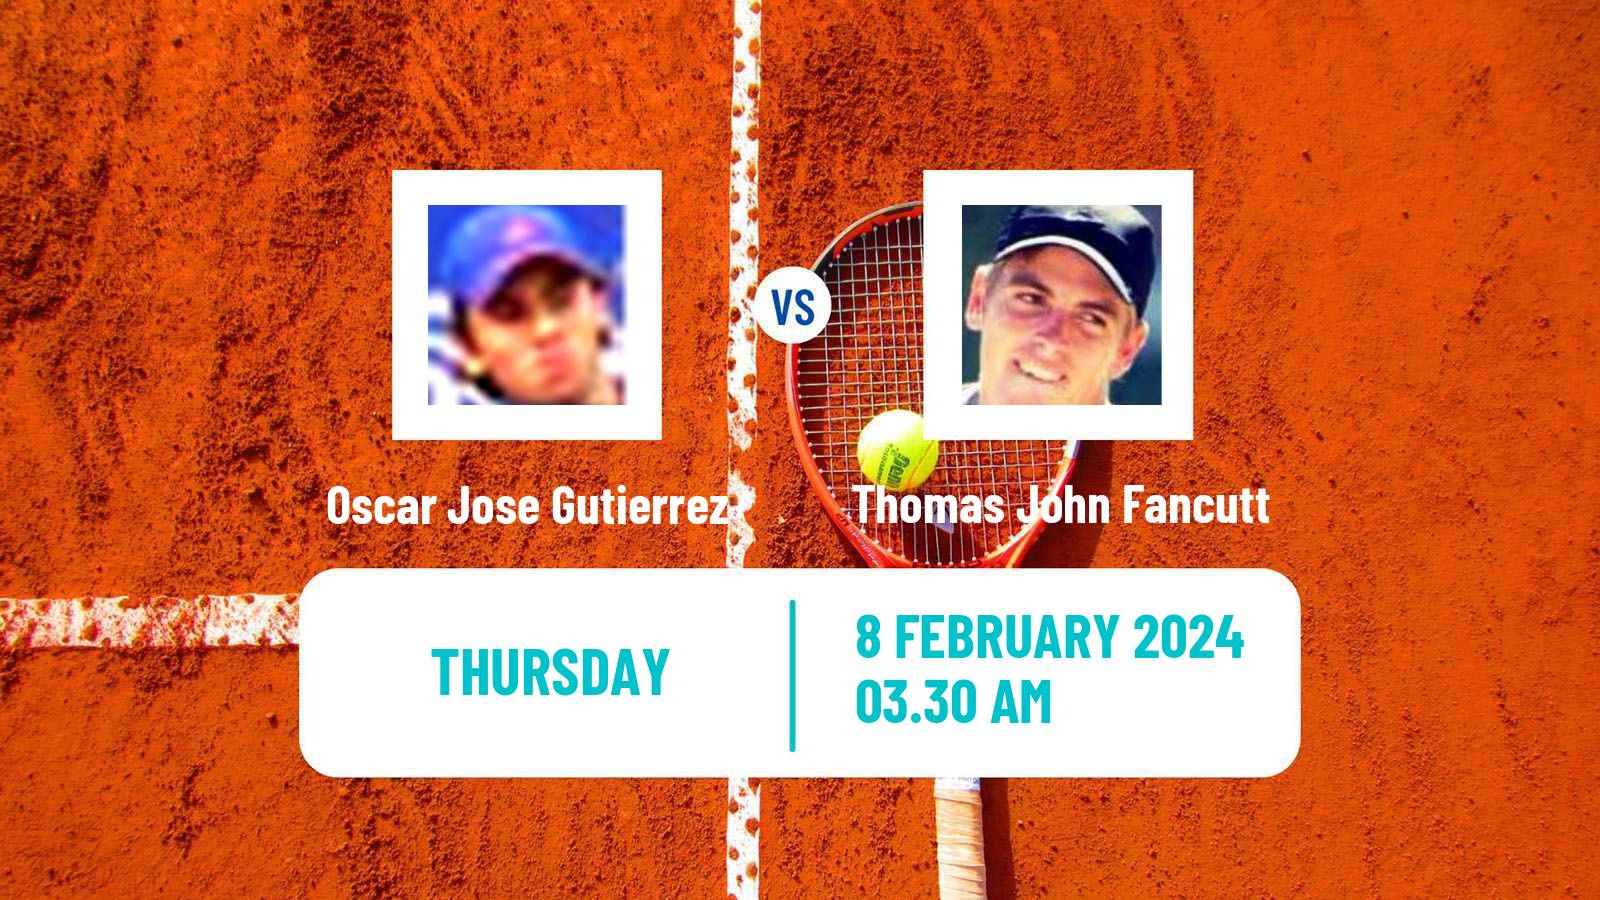 Tennis ITF M25 Hammamet 2 Men Oscar Jose Gutierrez - Thomas John Fancutt